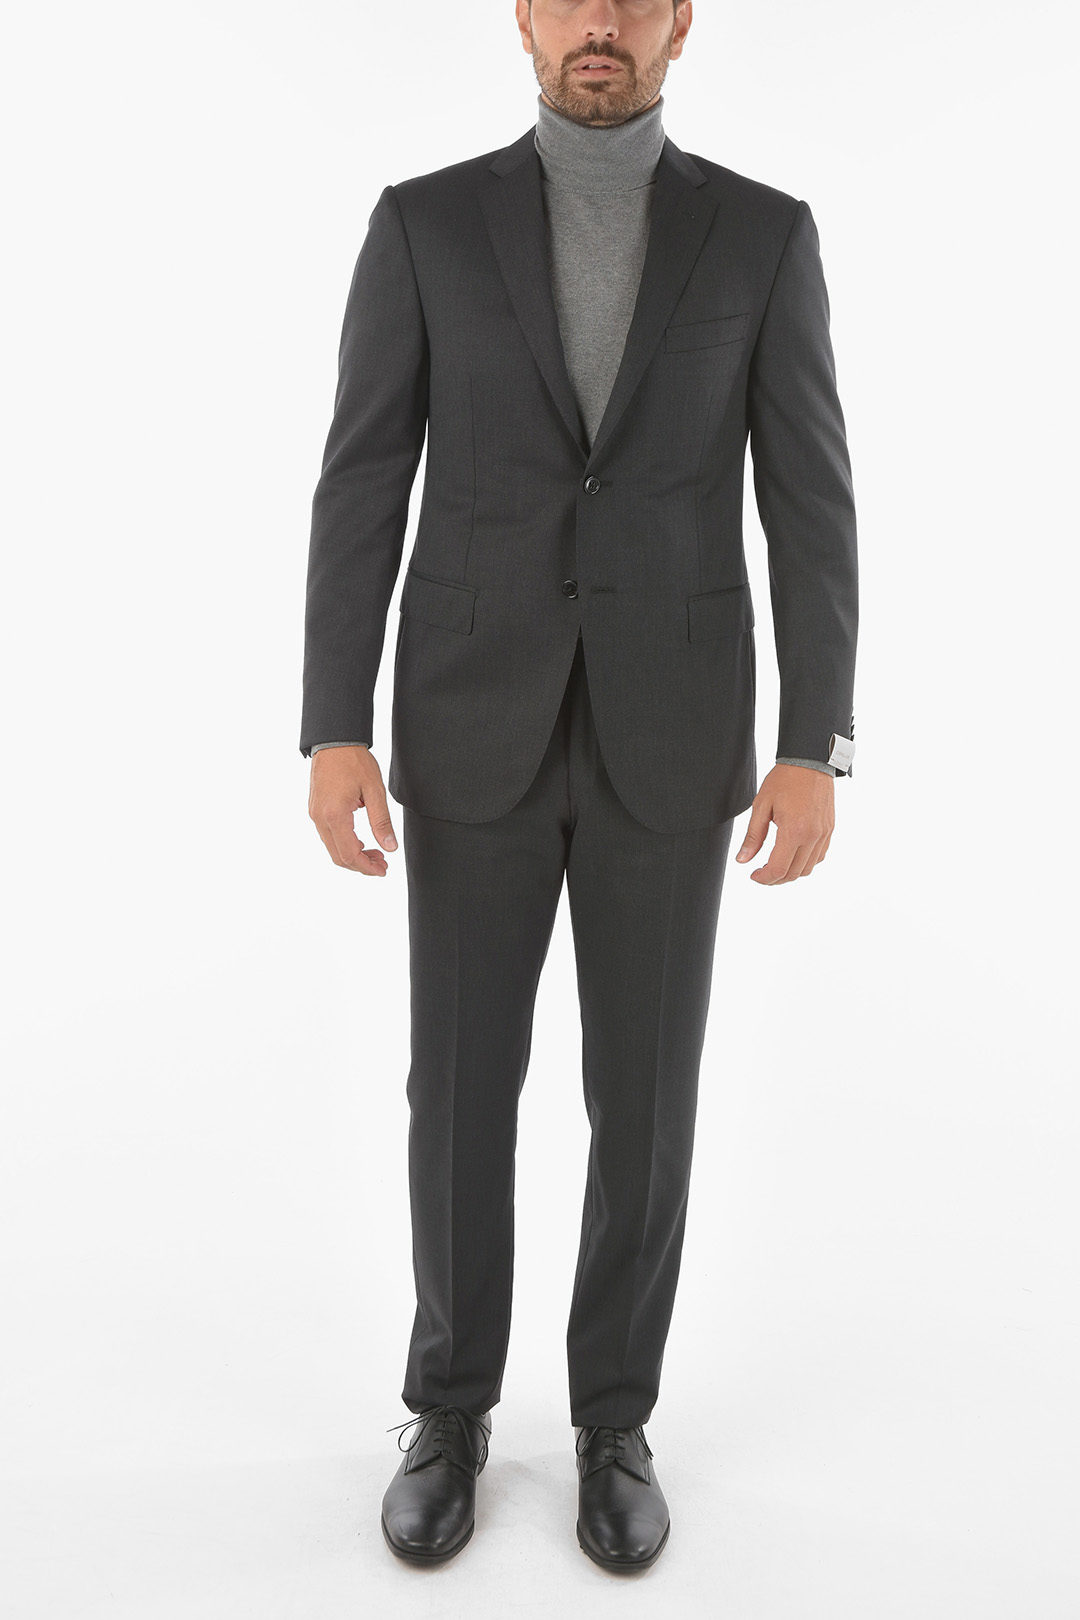 Corneliani Virgin Wool ACADEMY Suit with Notch Lapel men - Glamood Outlet